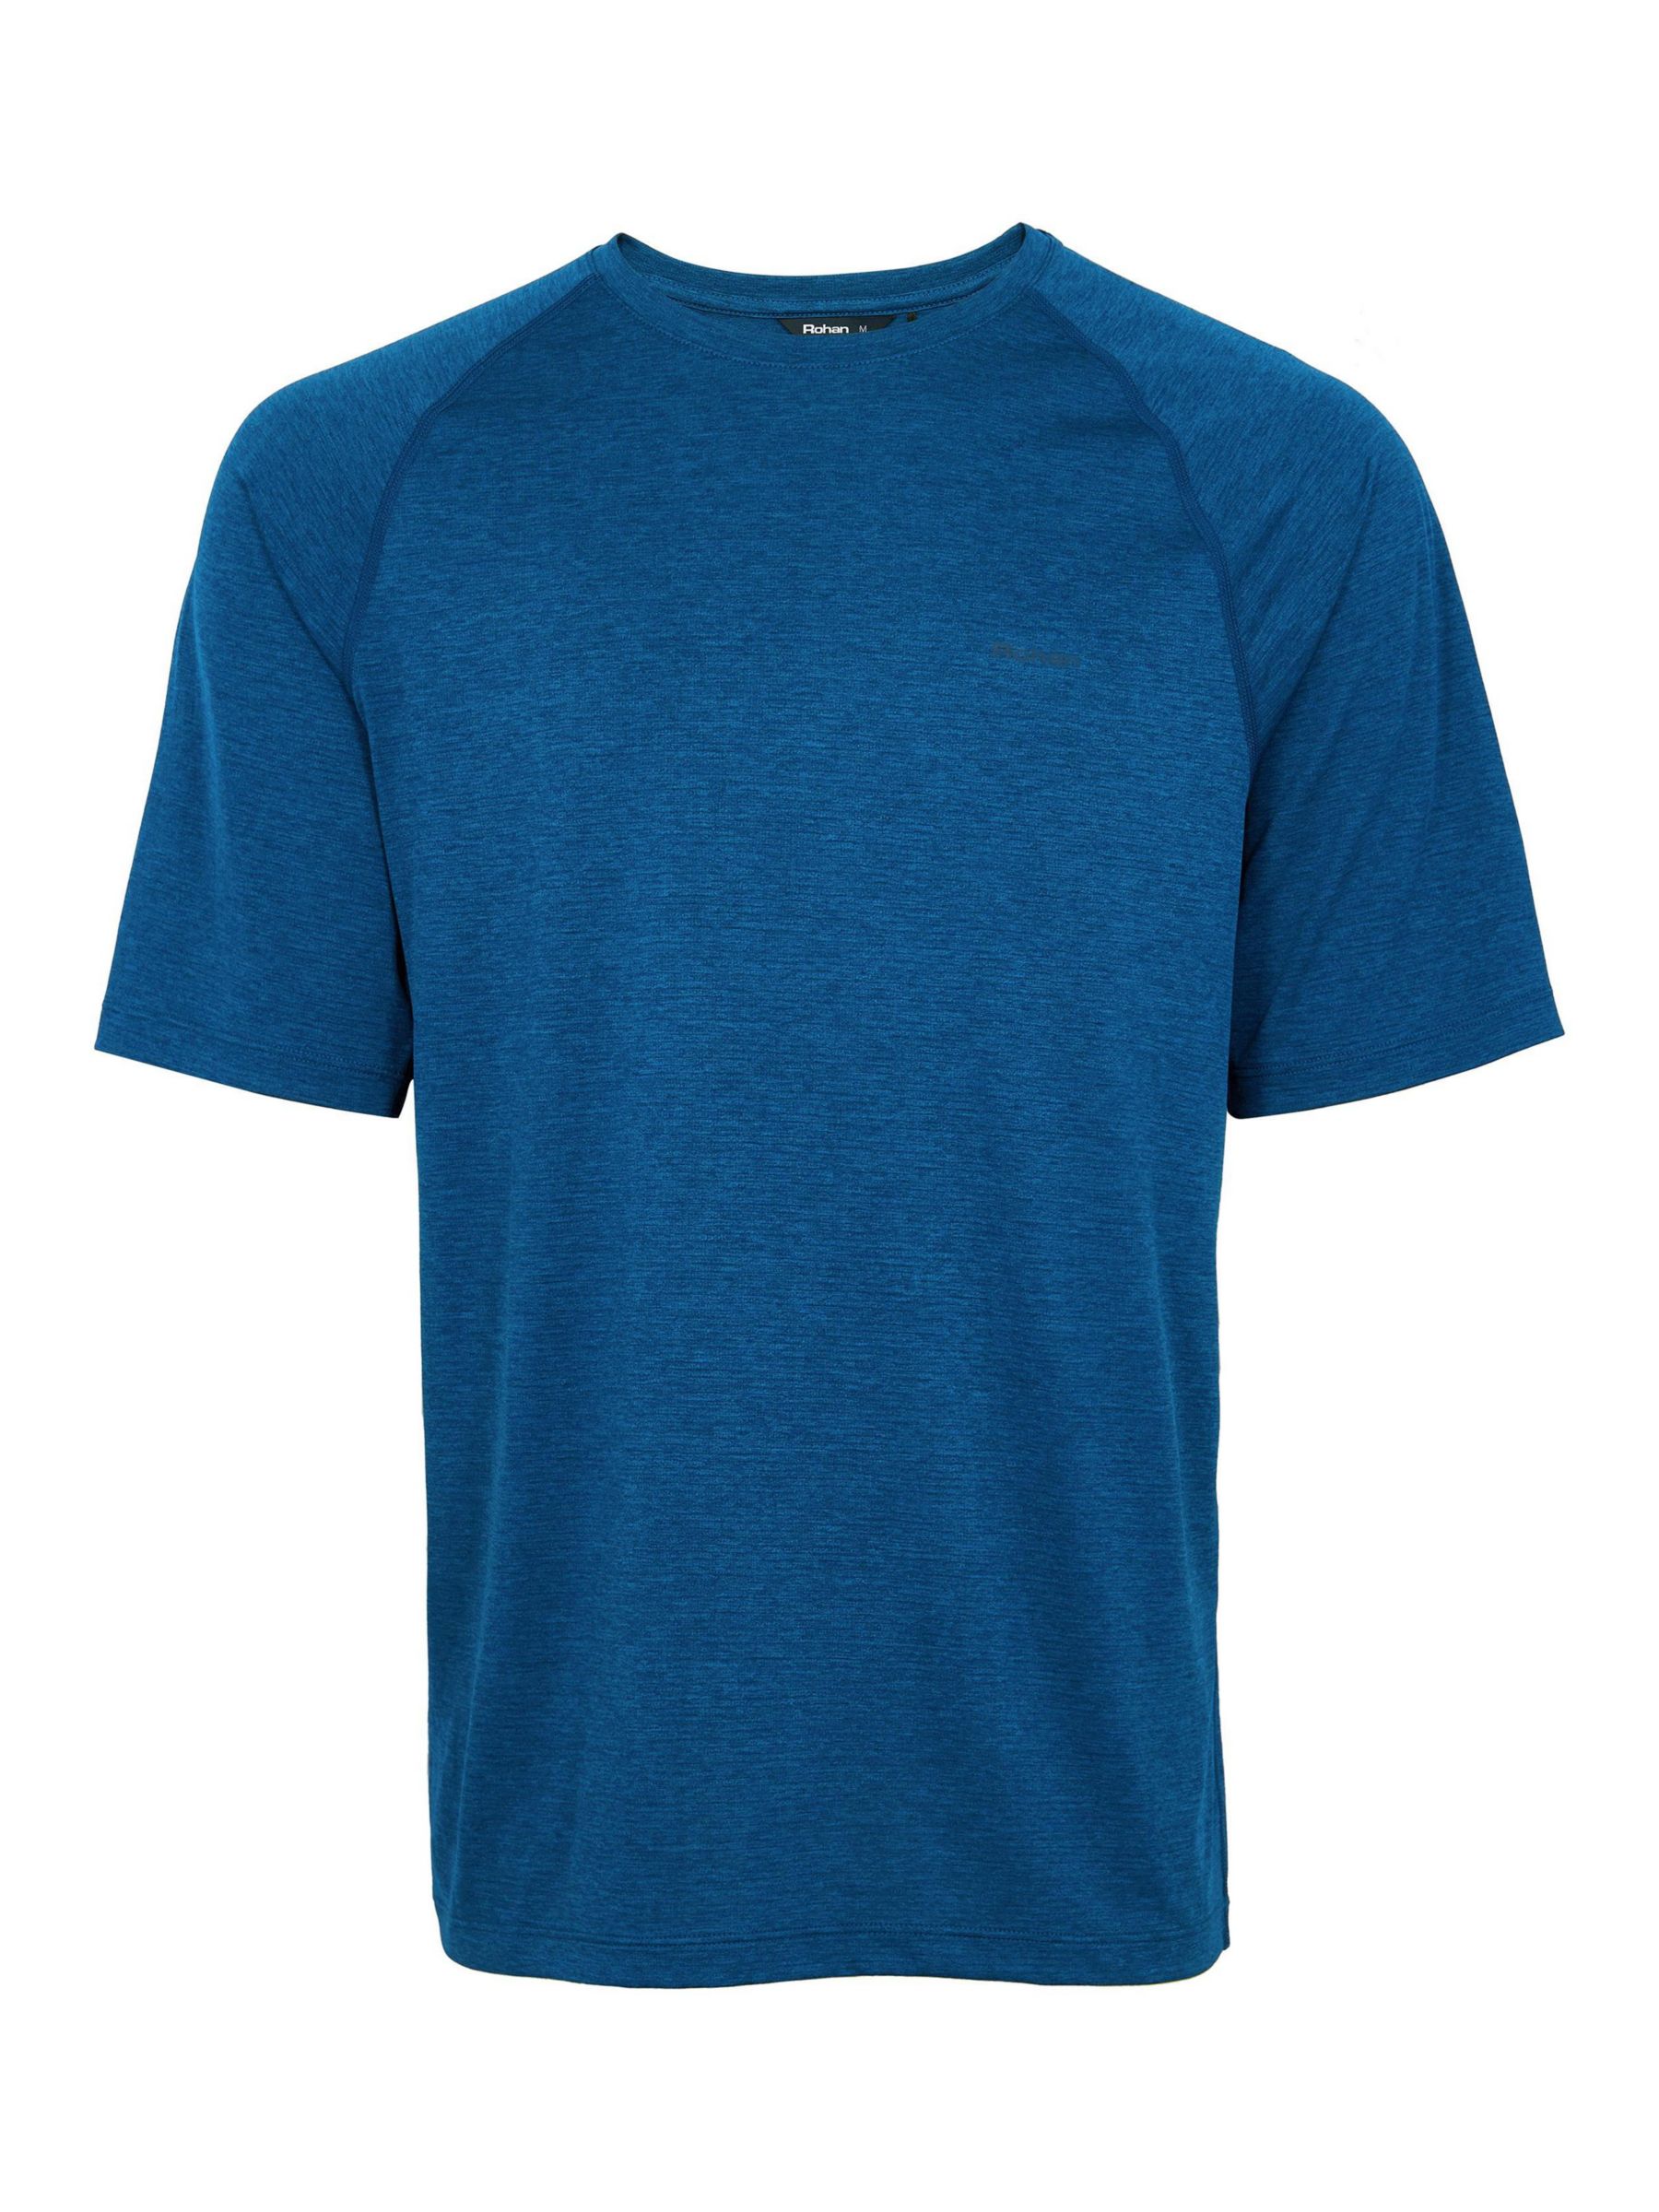 Rohan High Wicking Vapour Short Sleeve T-Shirt, Electric Blue, M